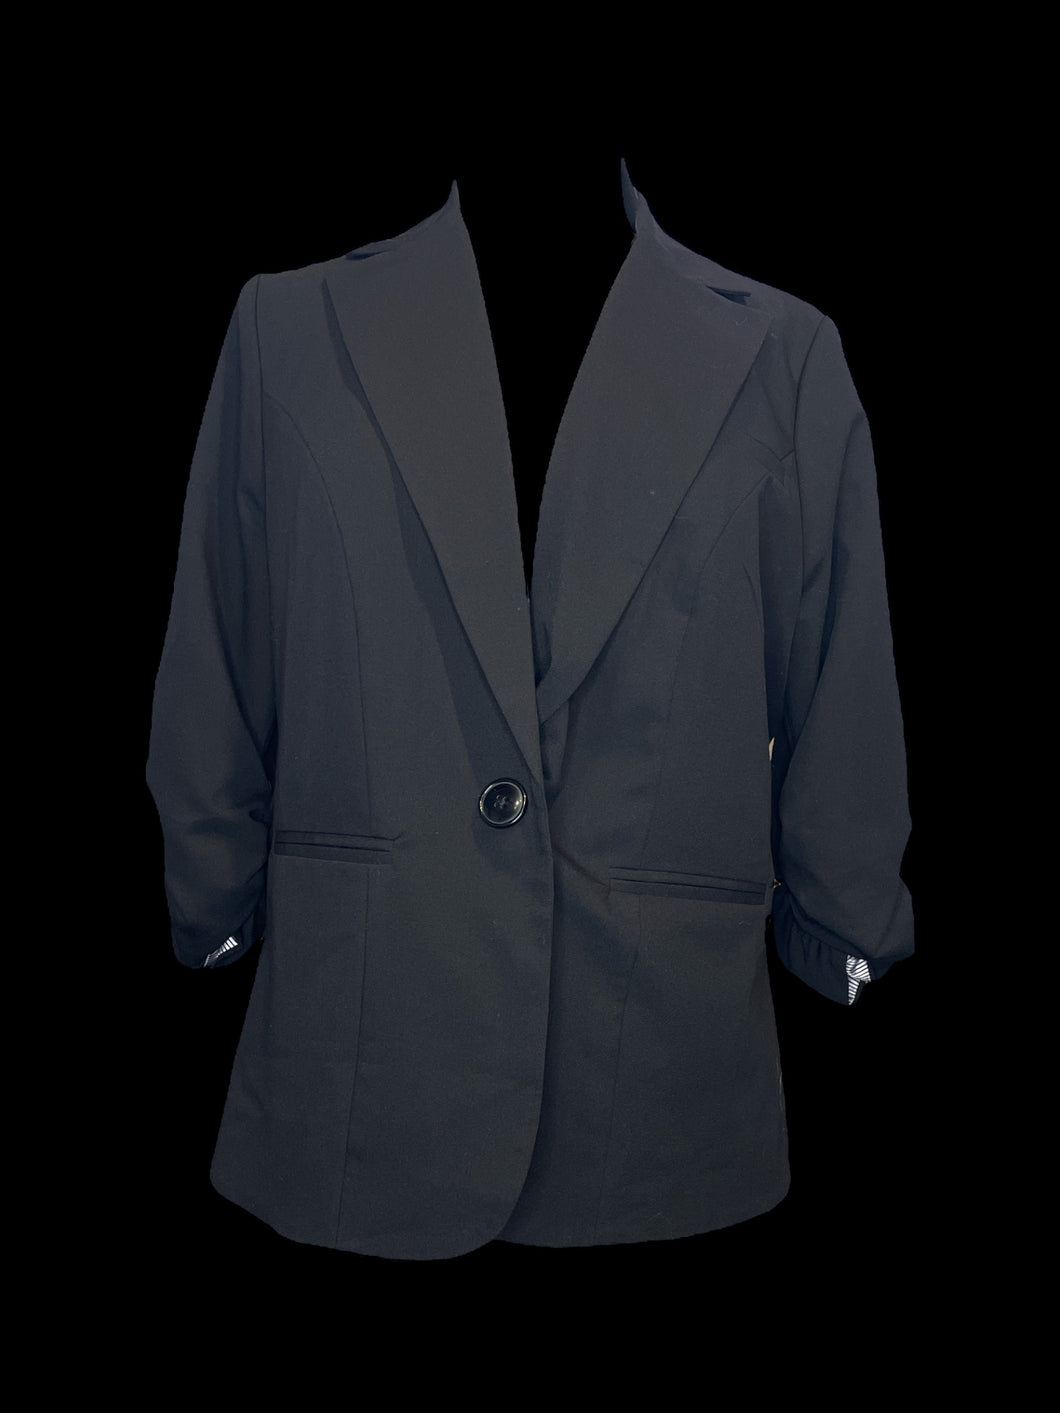 L Black 3/4 sleeve single breasted blazer w/ ruched sleeves, folded collar, & mock pockets